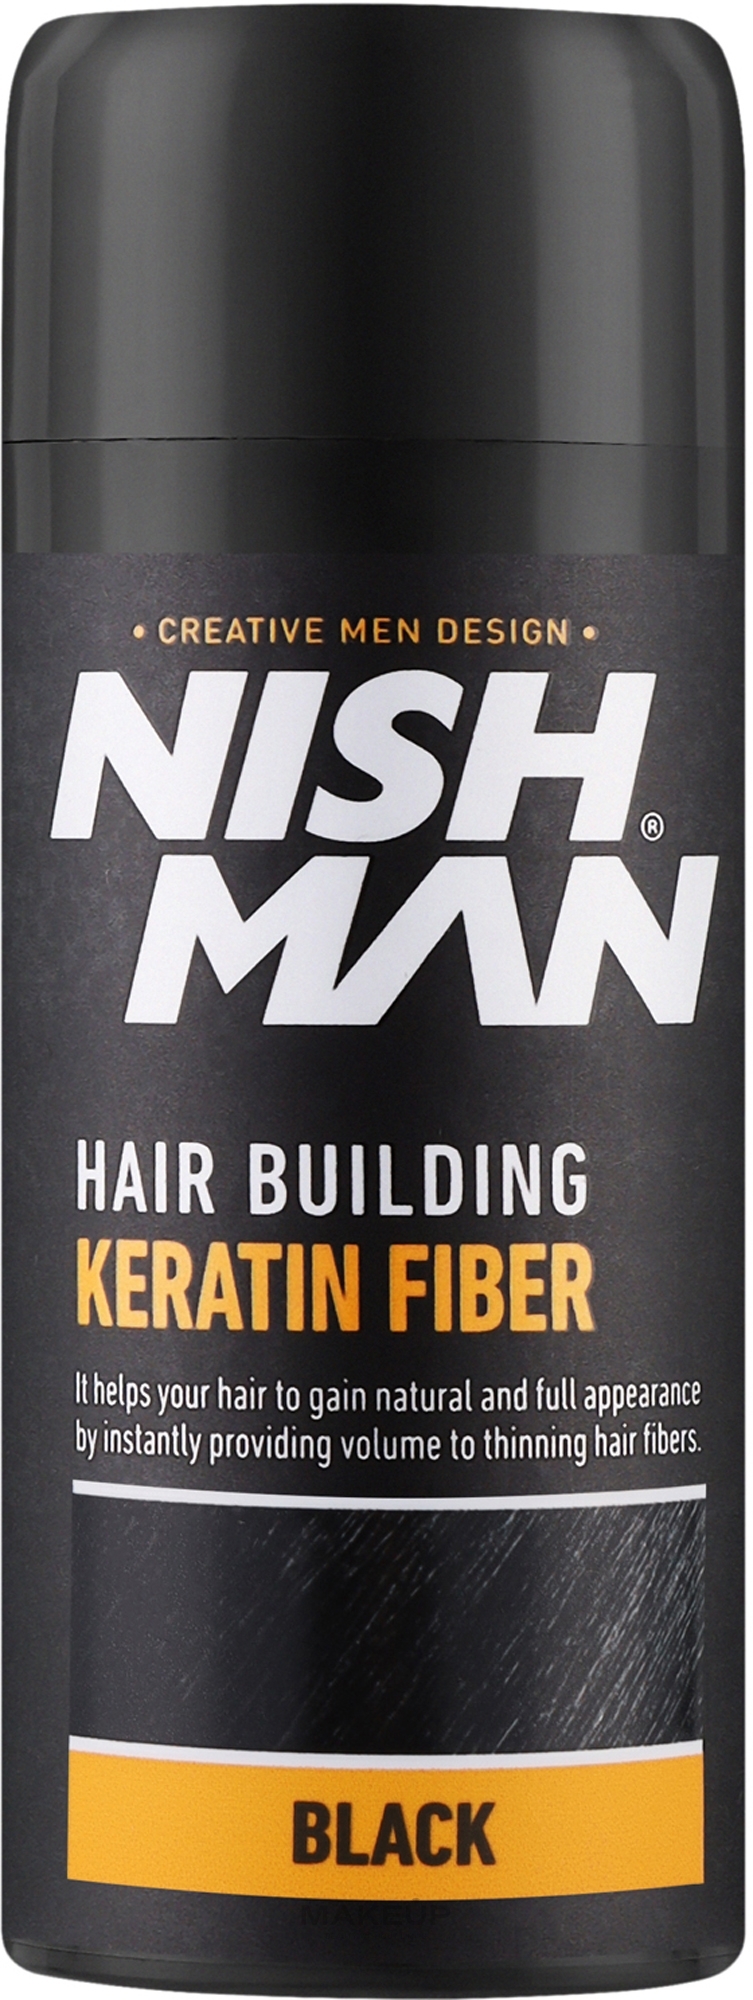 Набор для наращивания волос кератиновым волокном - Nishman Hair Building Keratin Fiber (powder/21g + mist/100ml) — фото Black